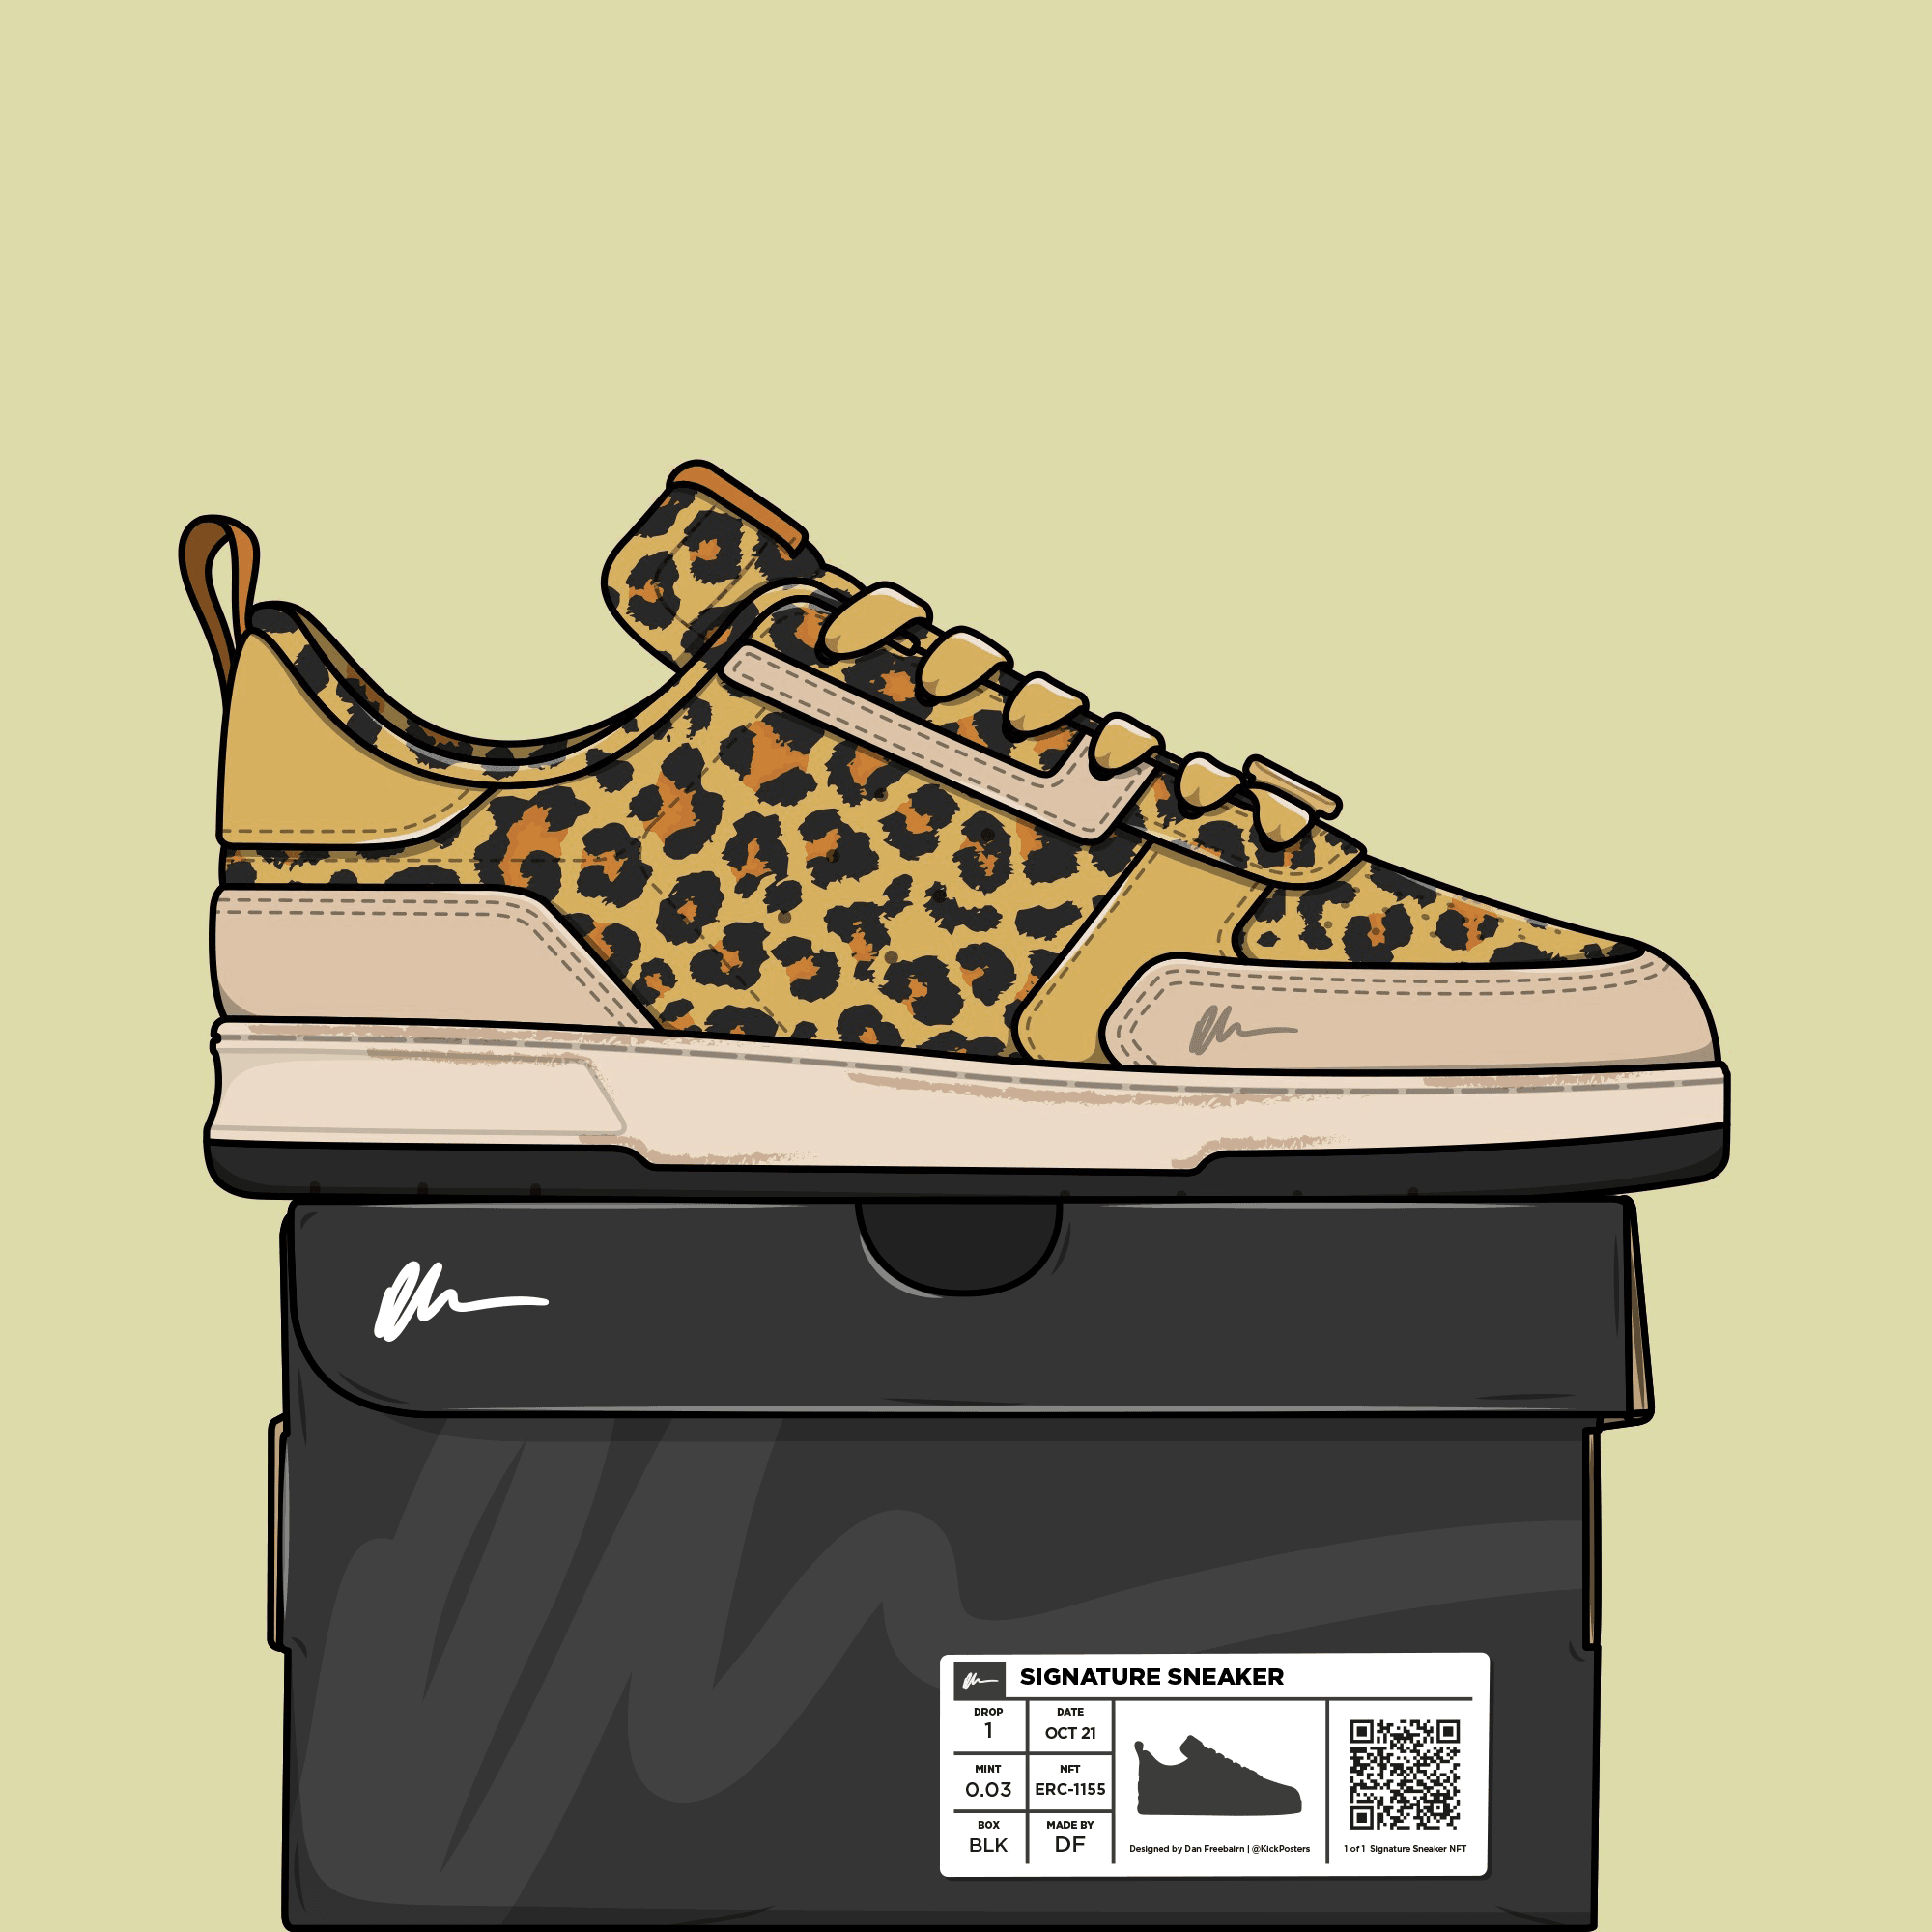 Signature Sneaker 'Cheetah' - #013